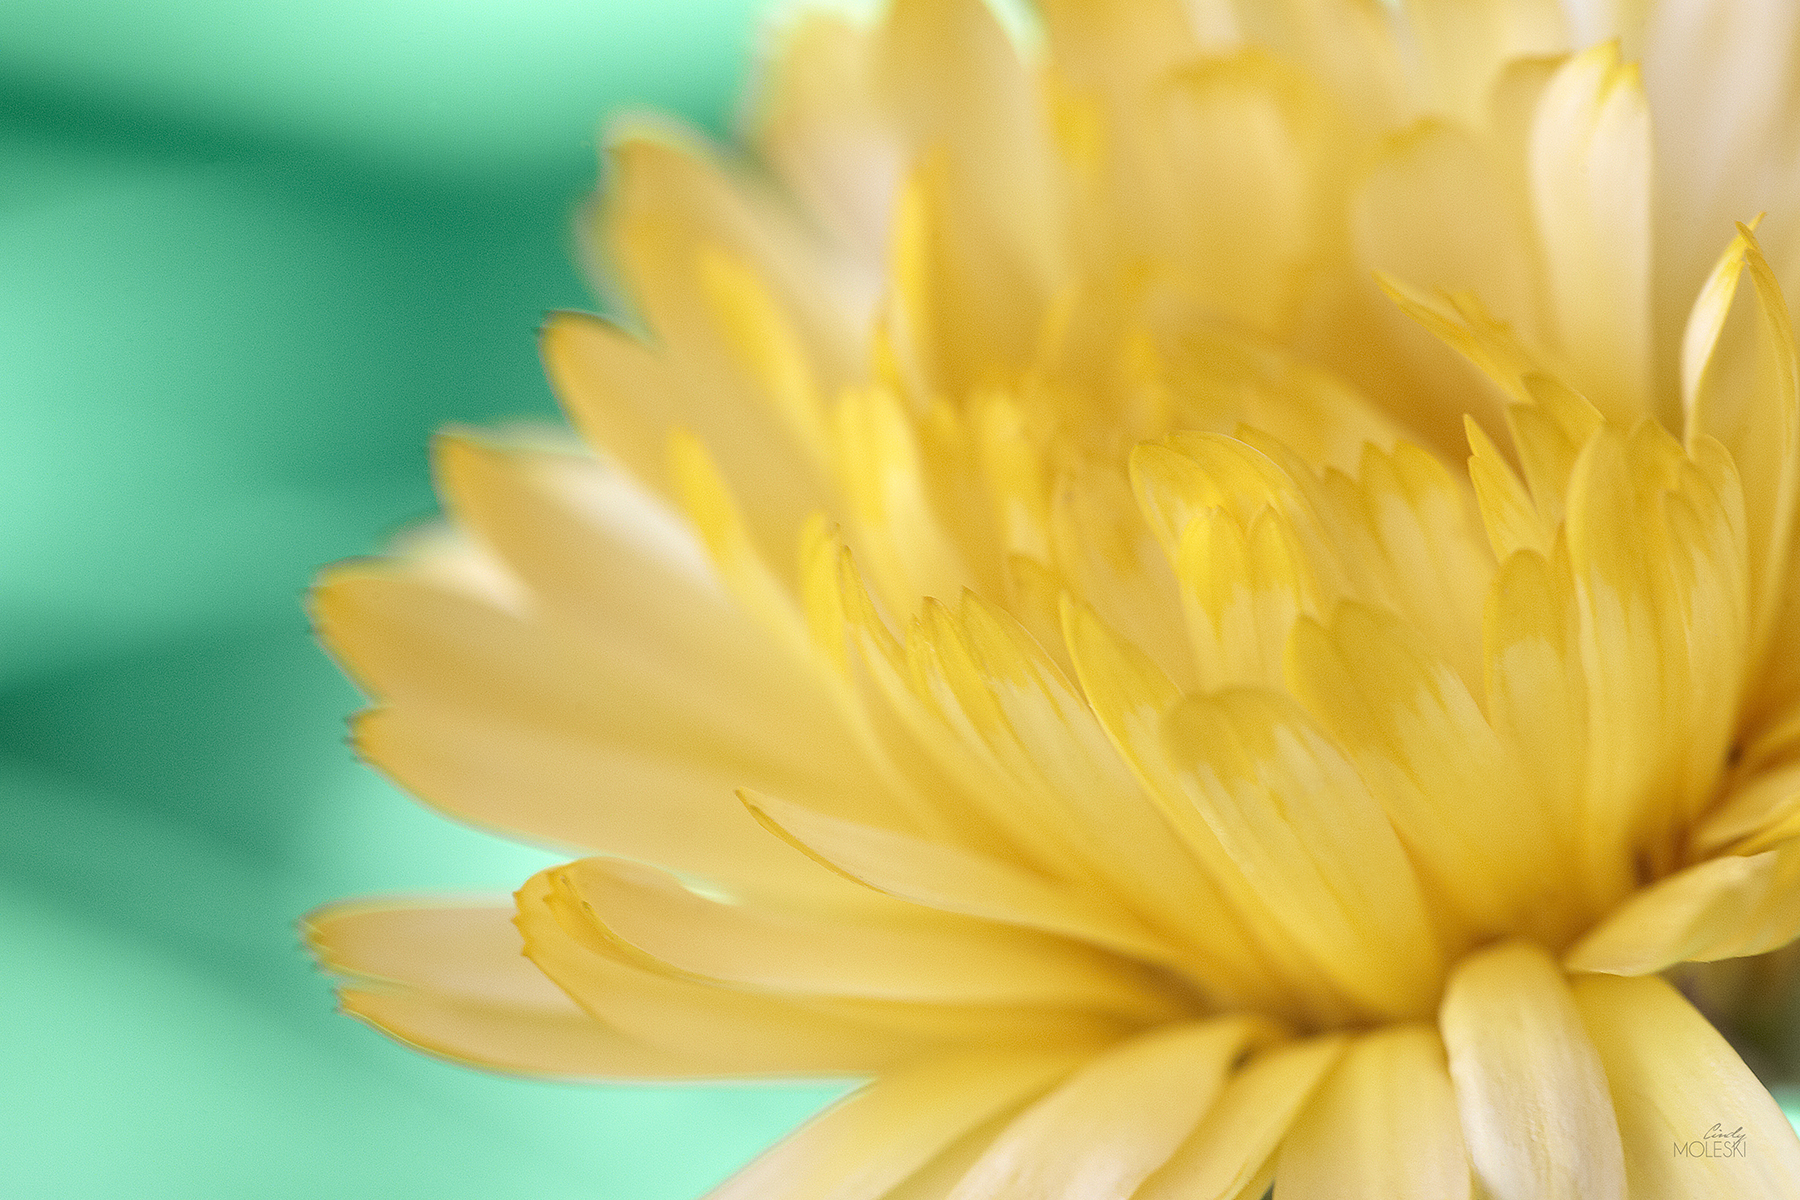 Little Teal, Lotta Yellow I-cindy-moleski-professional-photographer-saskatoon-saskatchewan-floral-straw-flower FB.jpg